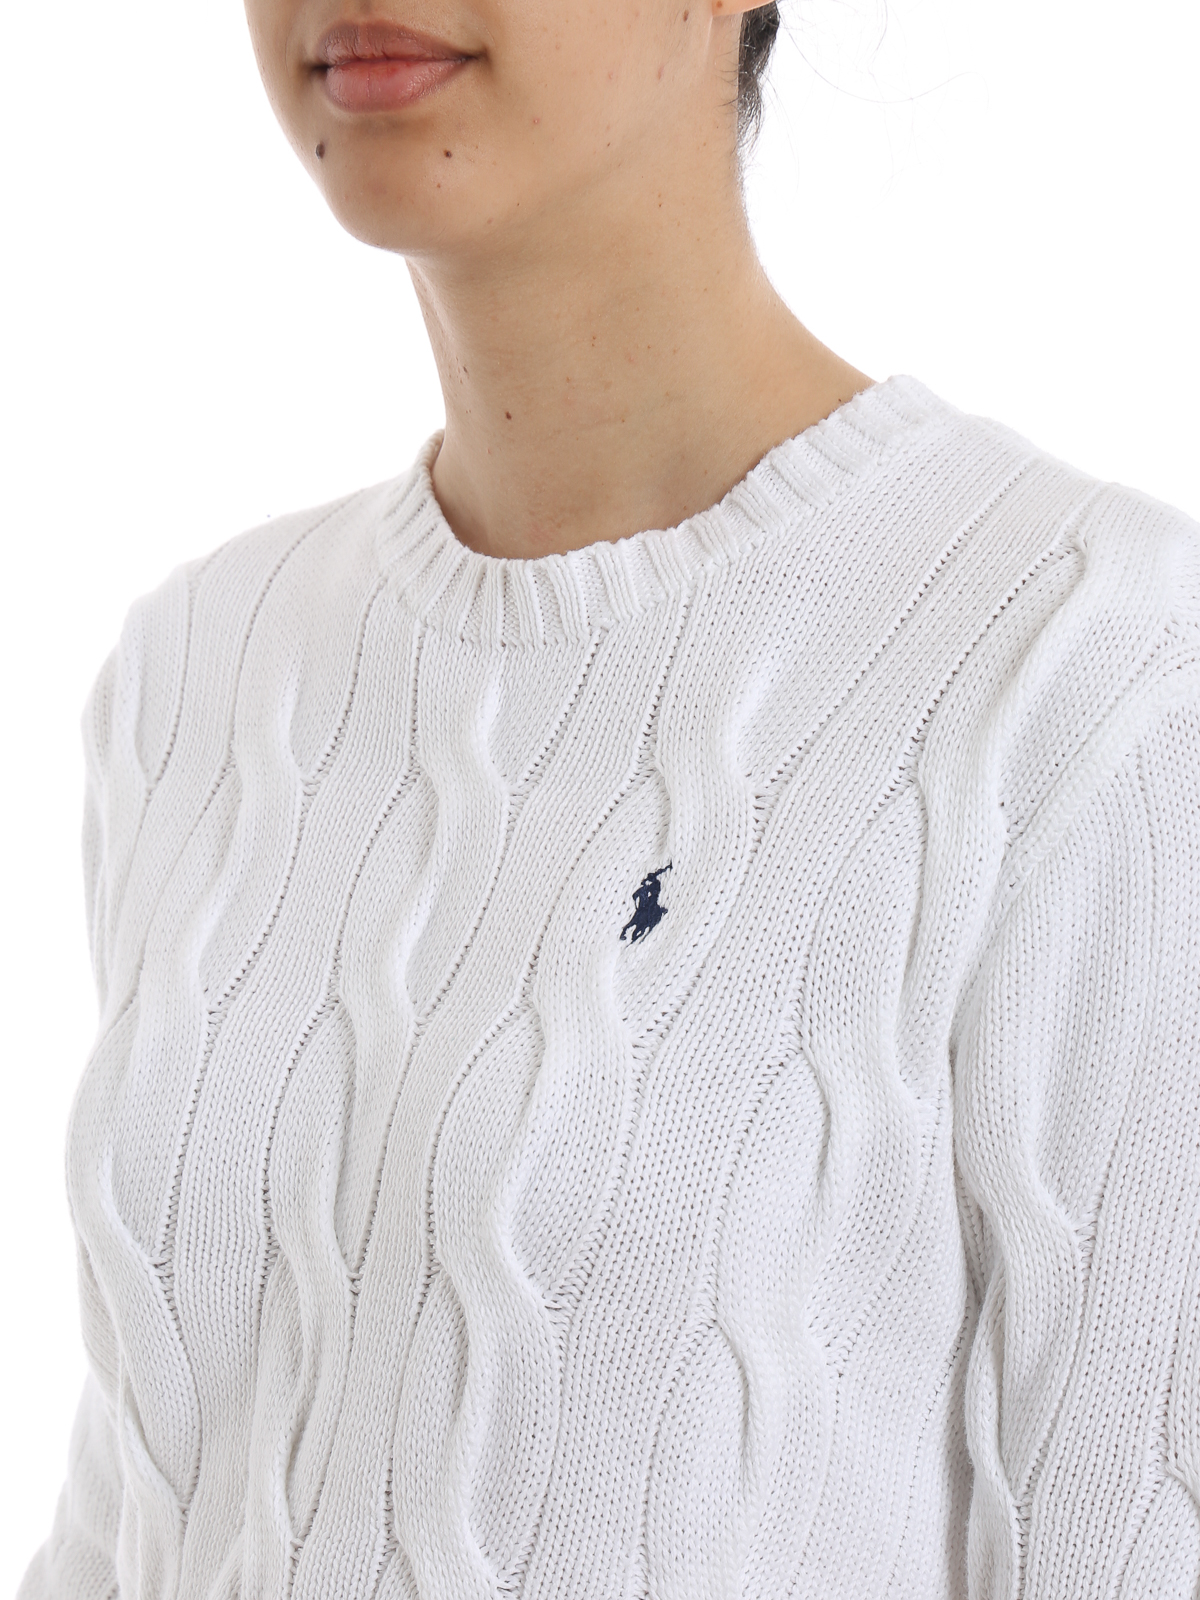 ralph lauren white knit sweater